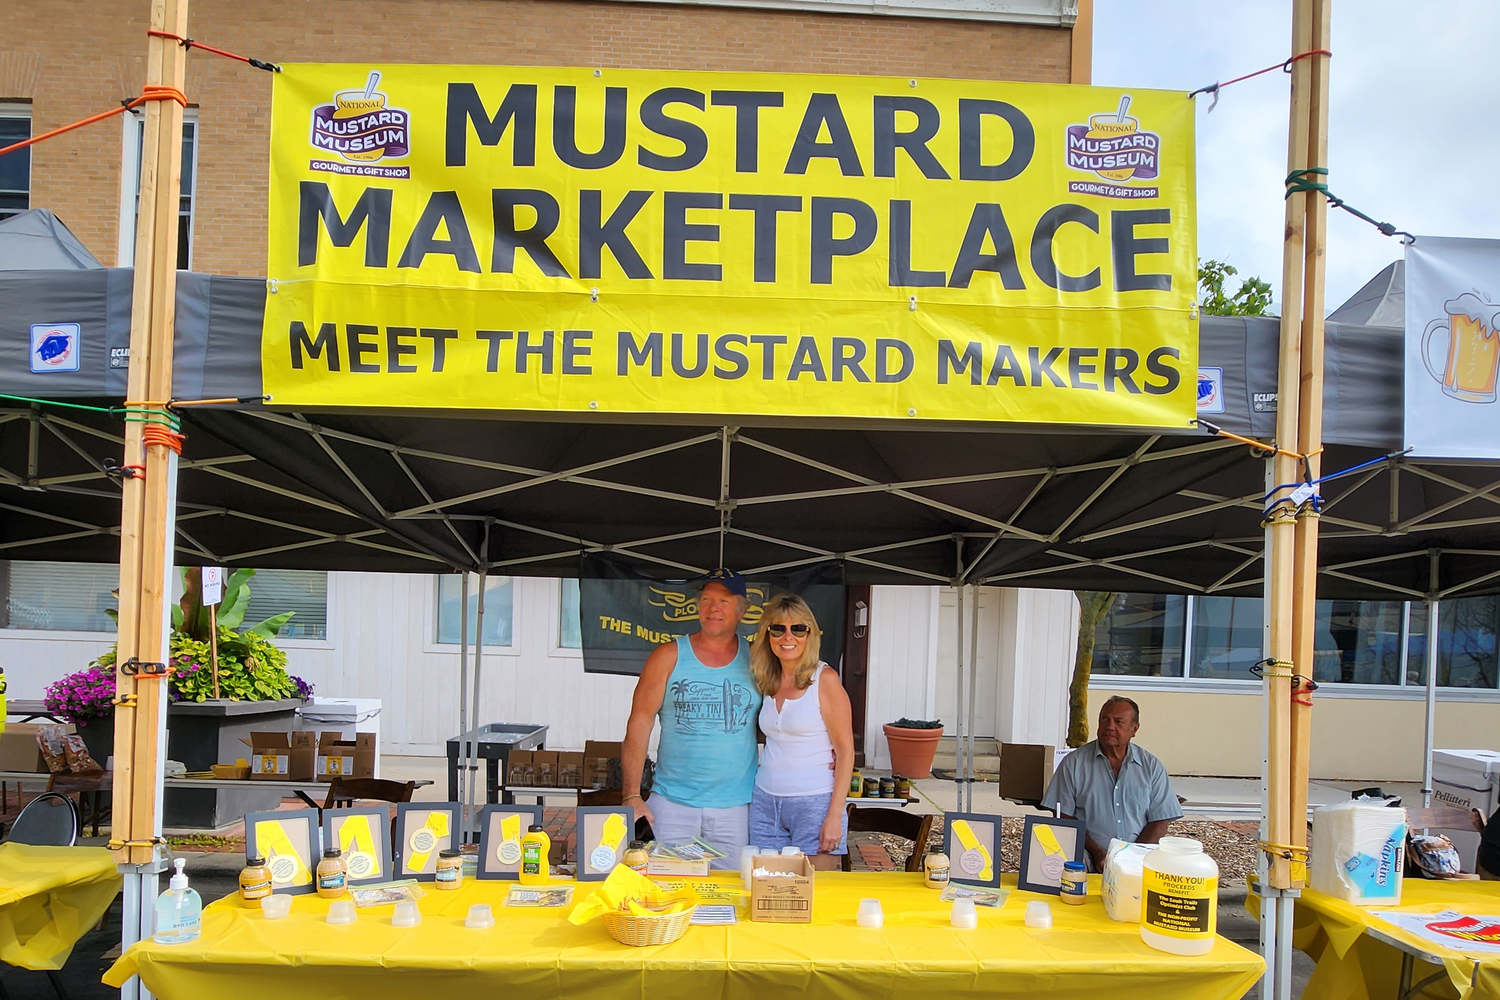 Mustard Makers & Marketplace